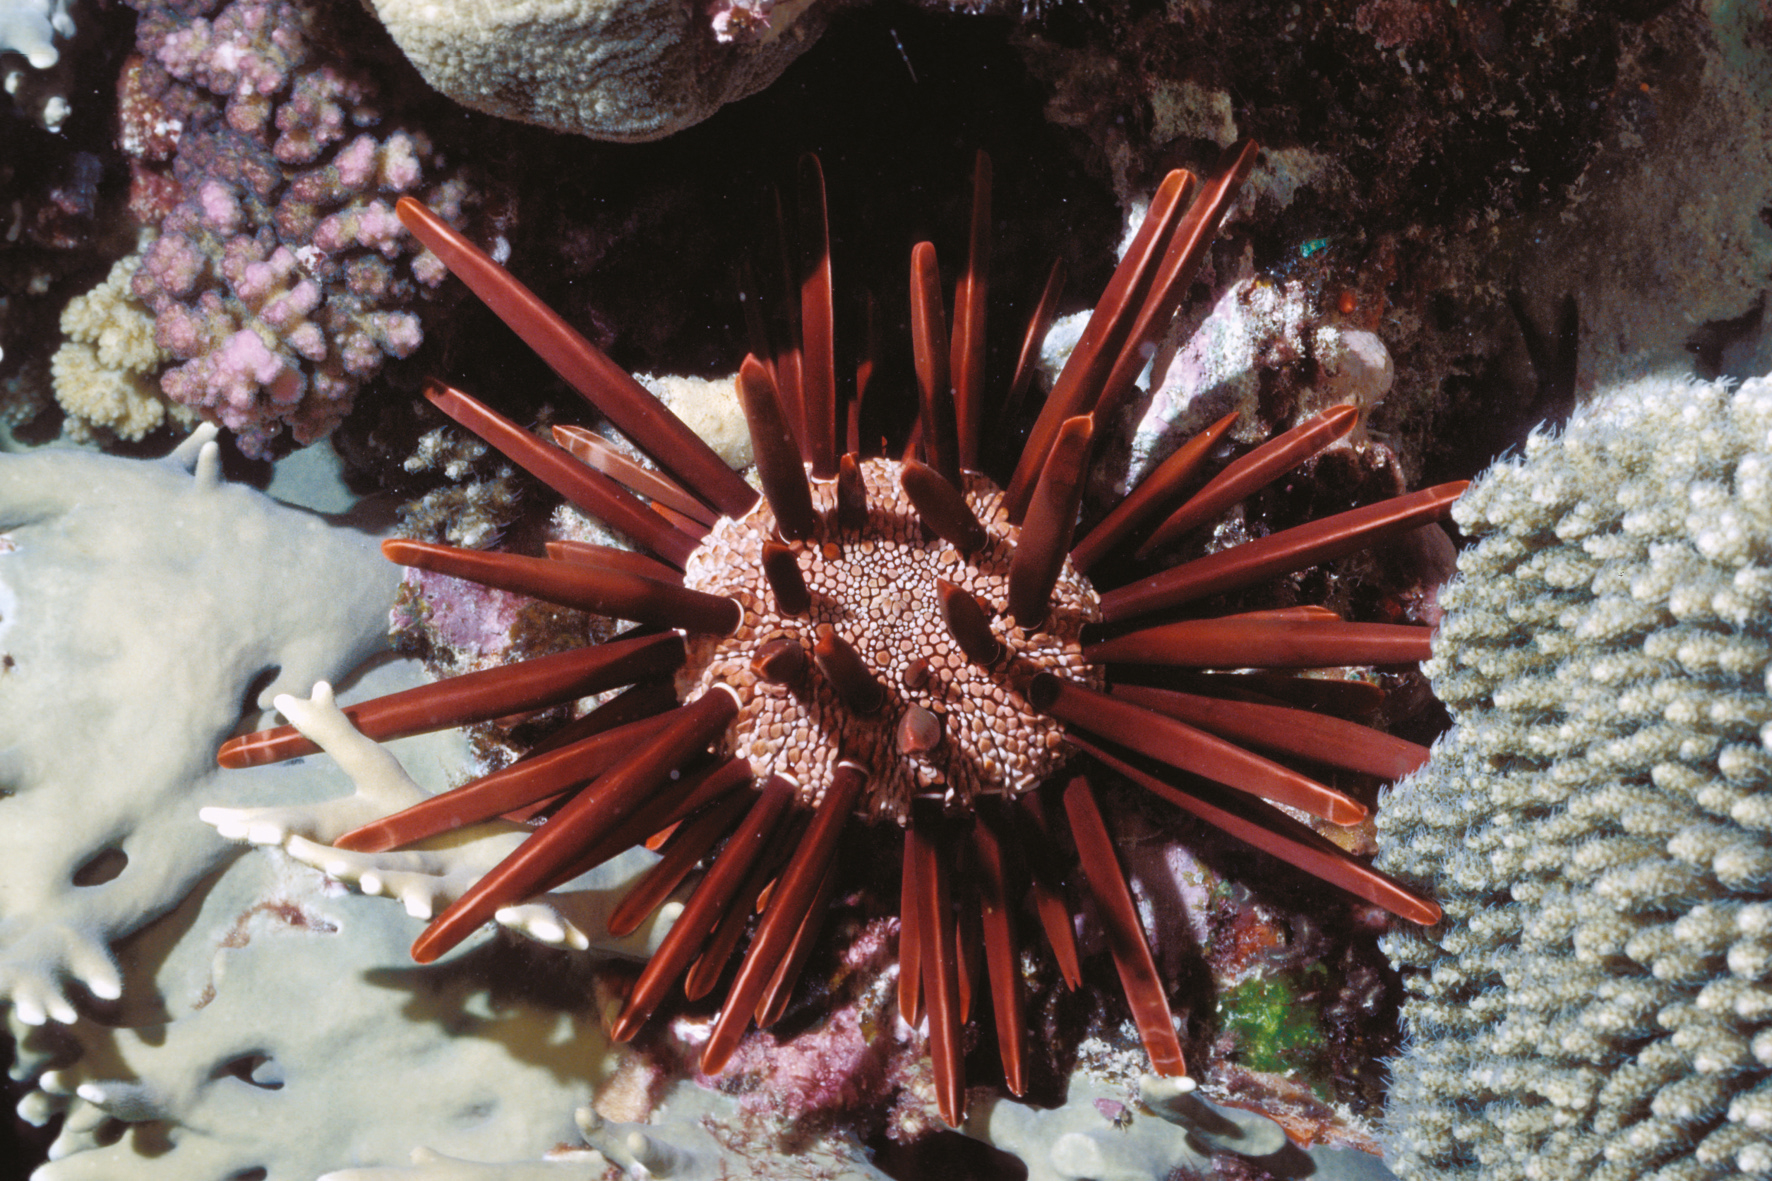 Sea urchins